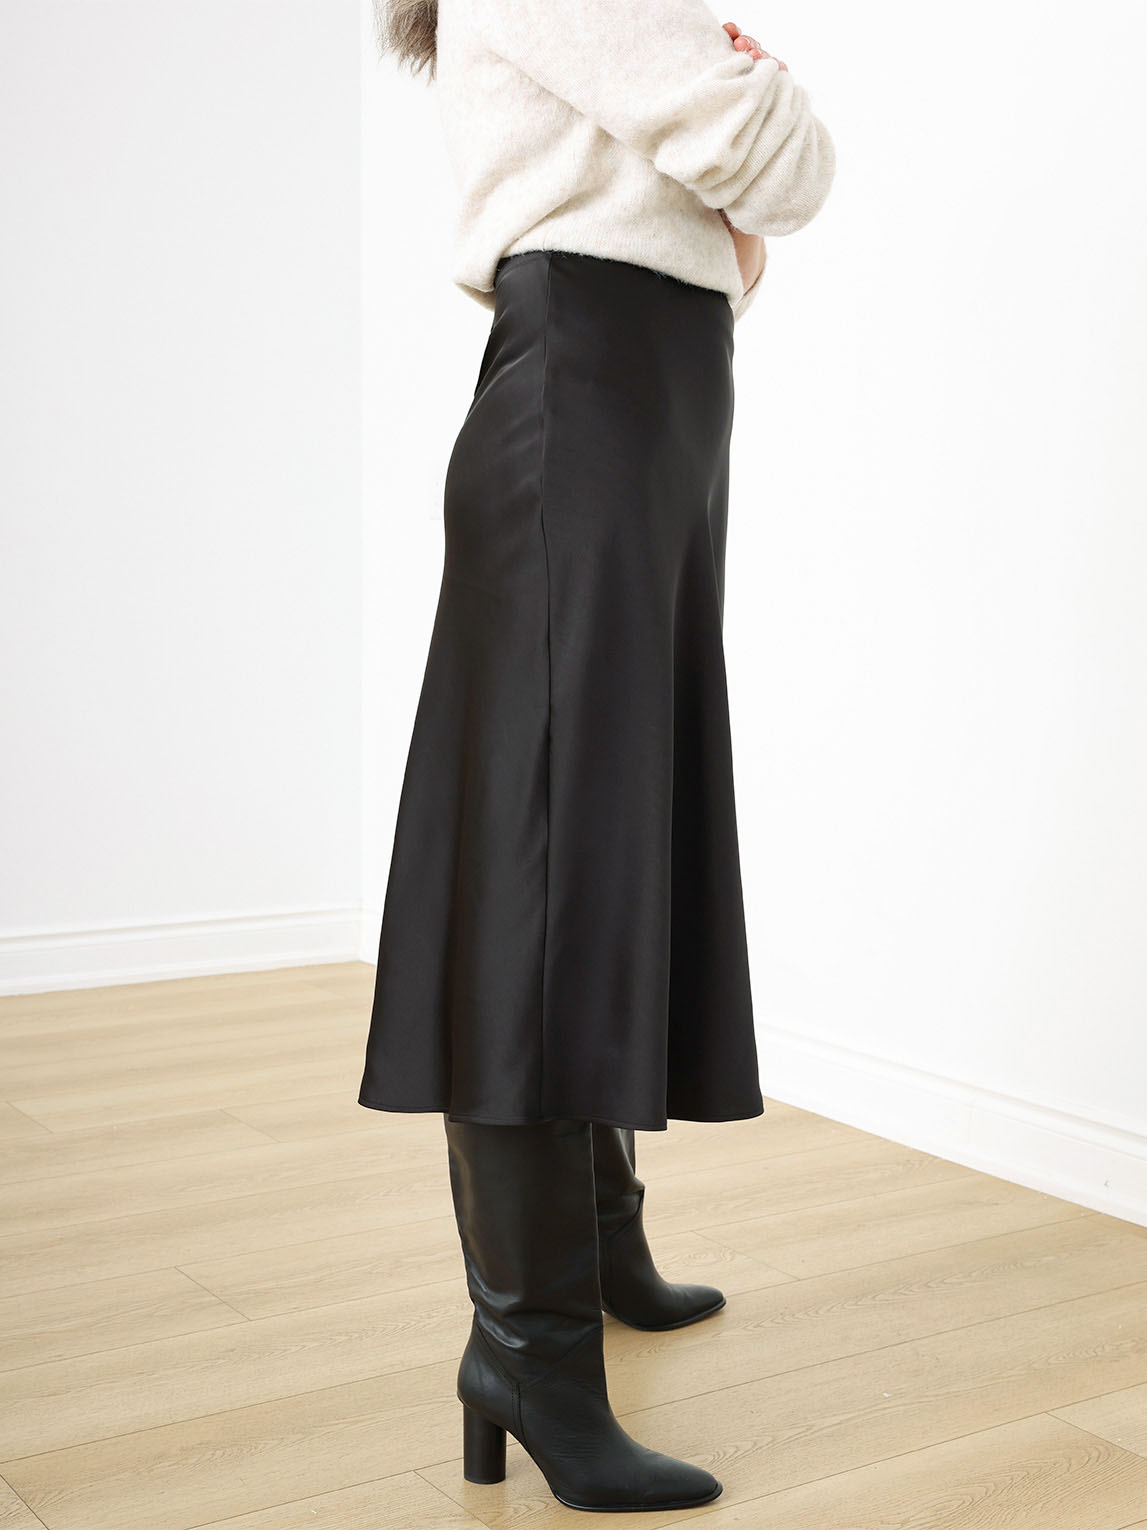 ALSLIAO Womens Silky Satin Midi Skirt High Waist Elastic Waist A Line Skirt  With Slit Brown XL 